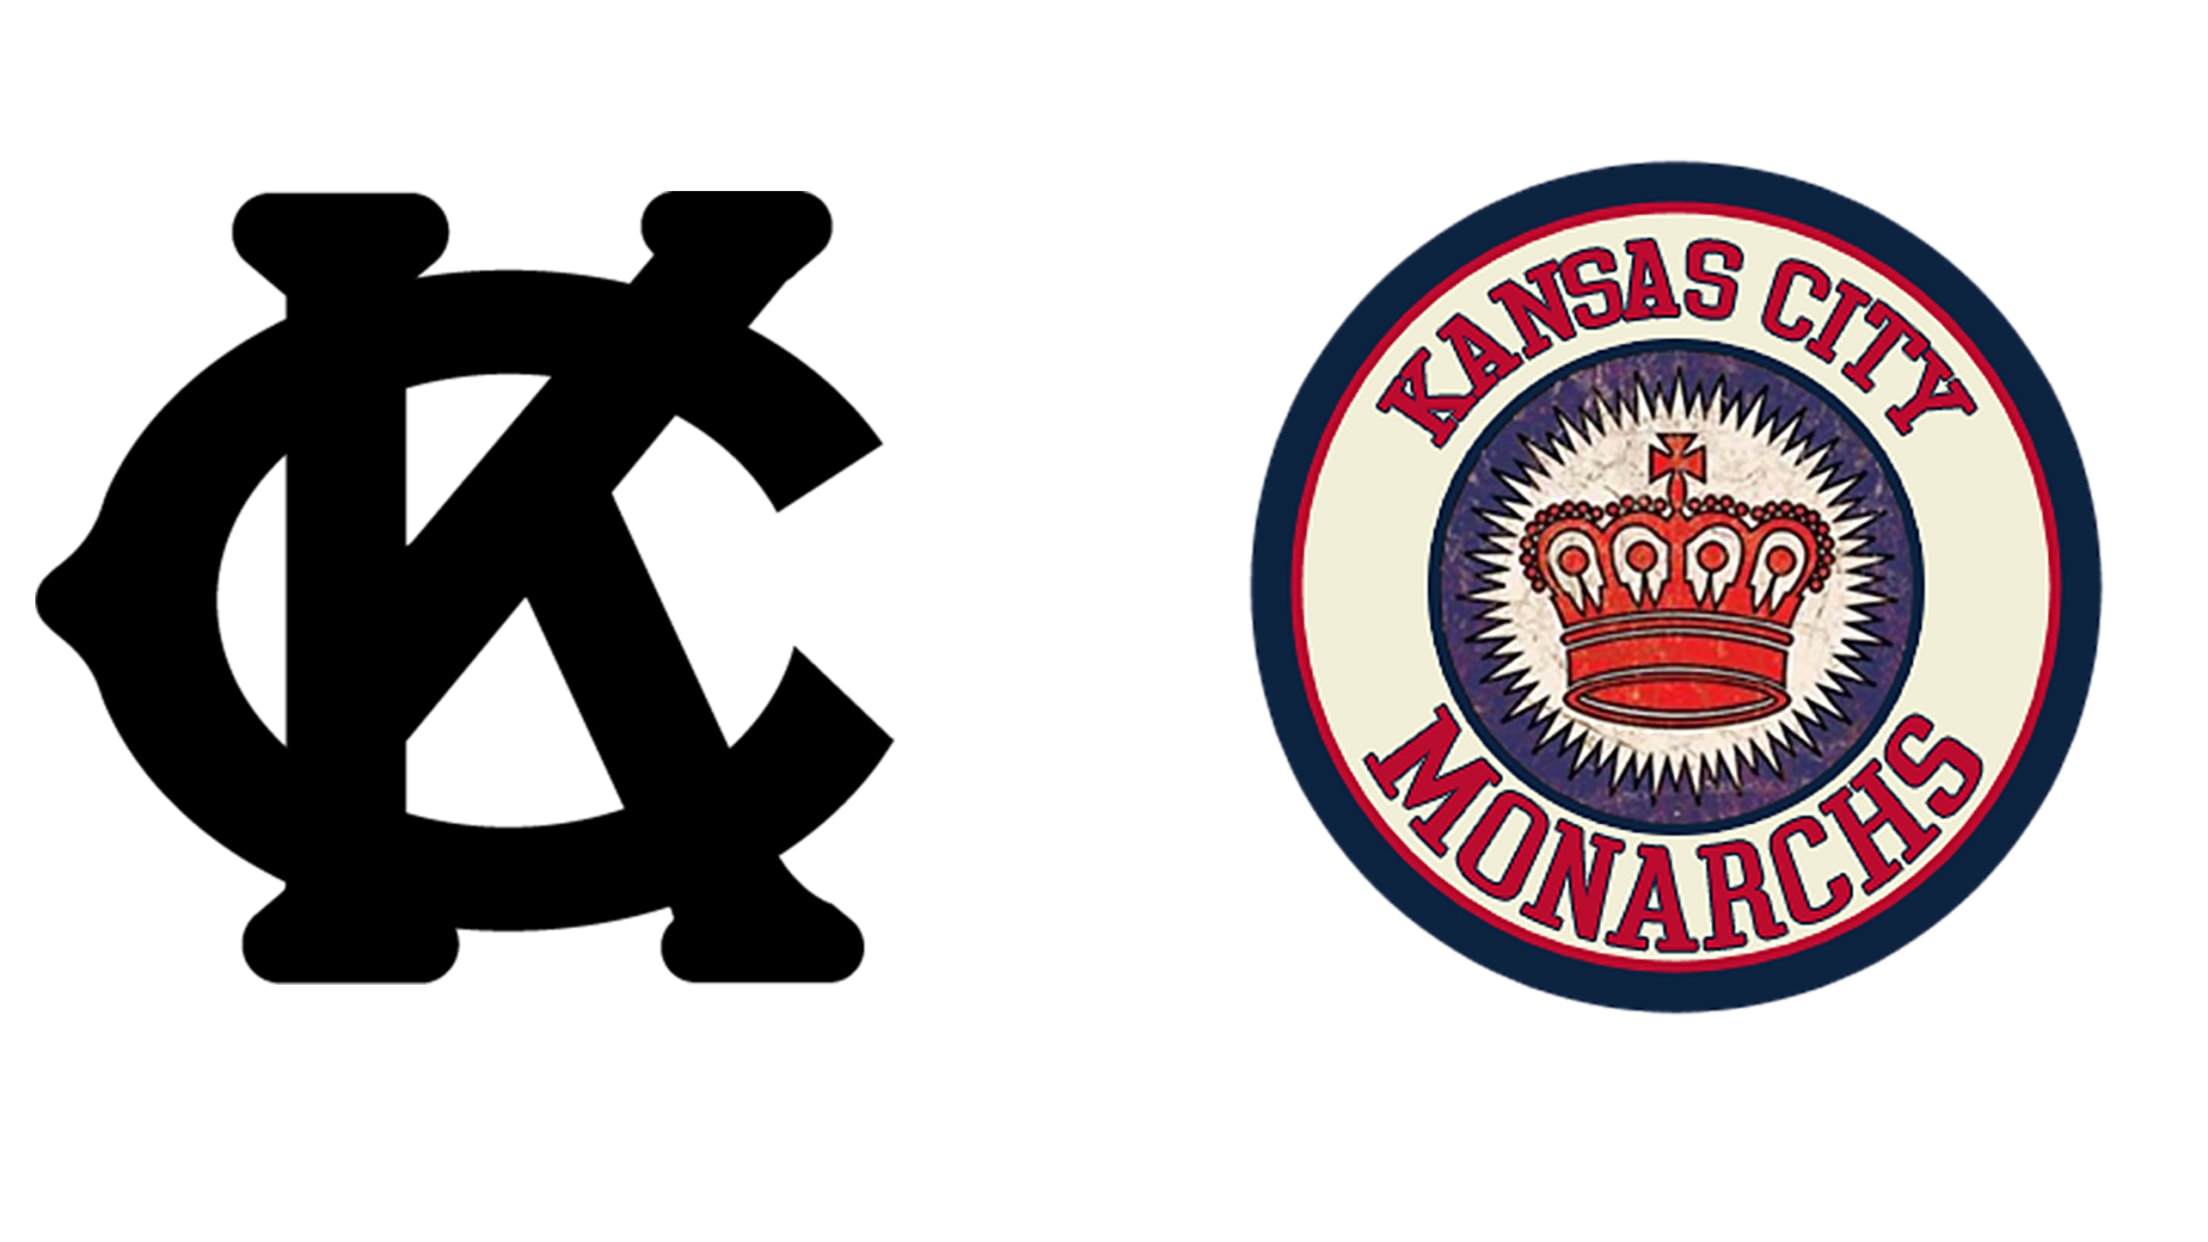 Kansas City Monarchs: Minor league baseball is back